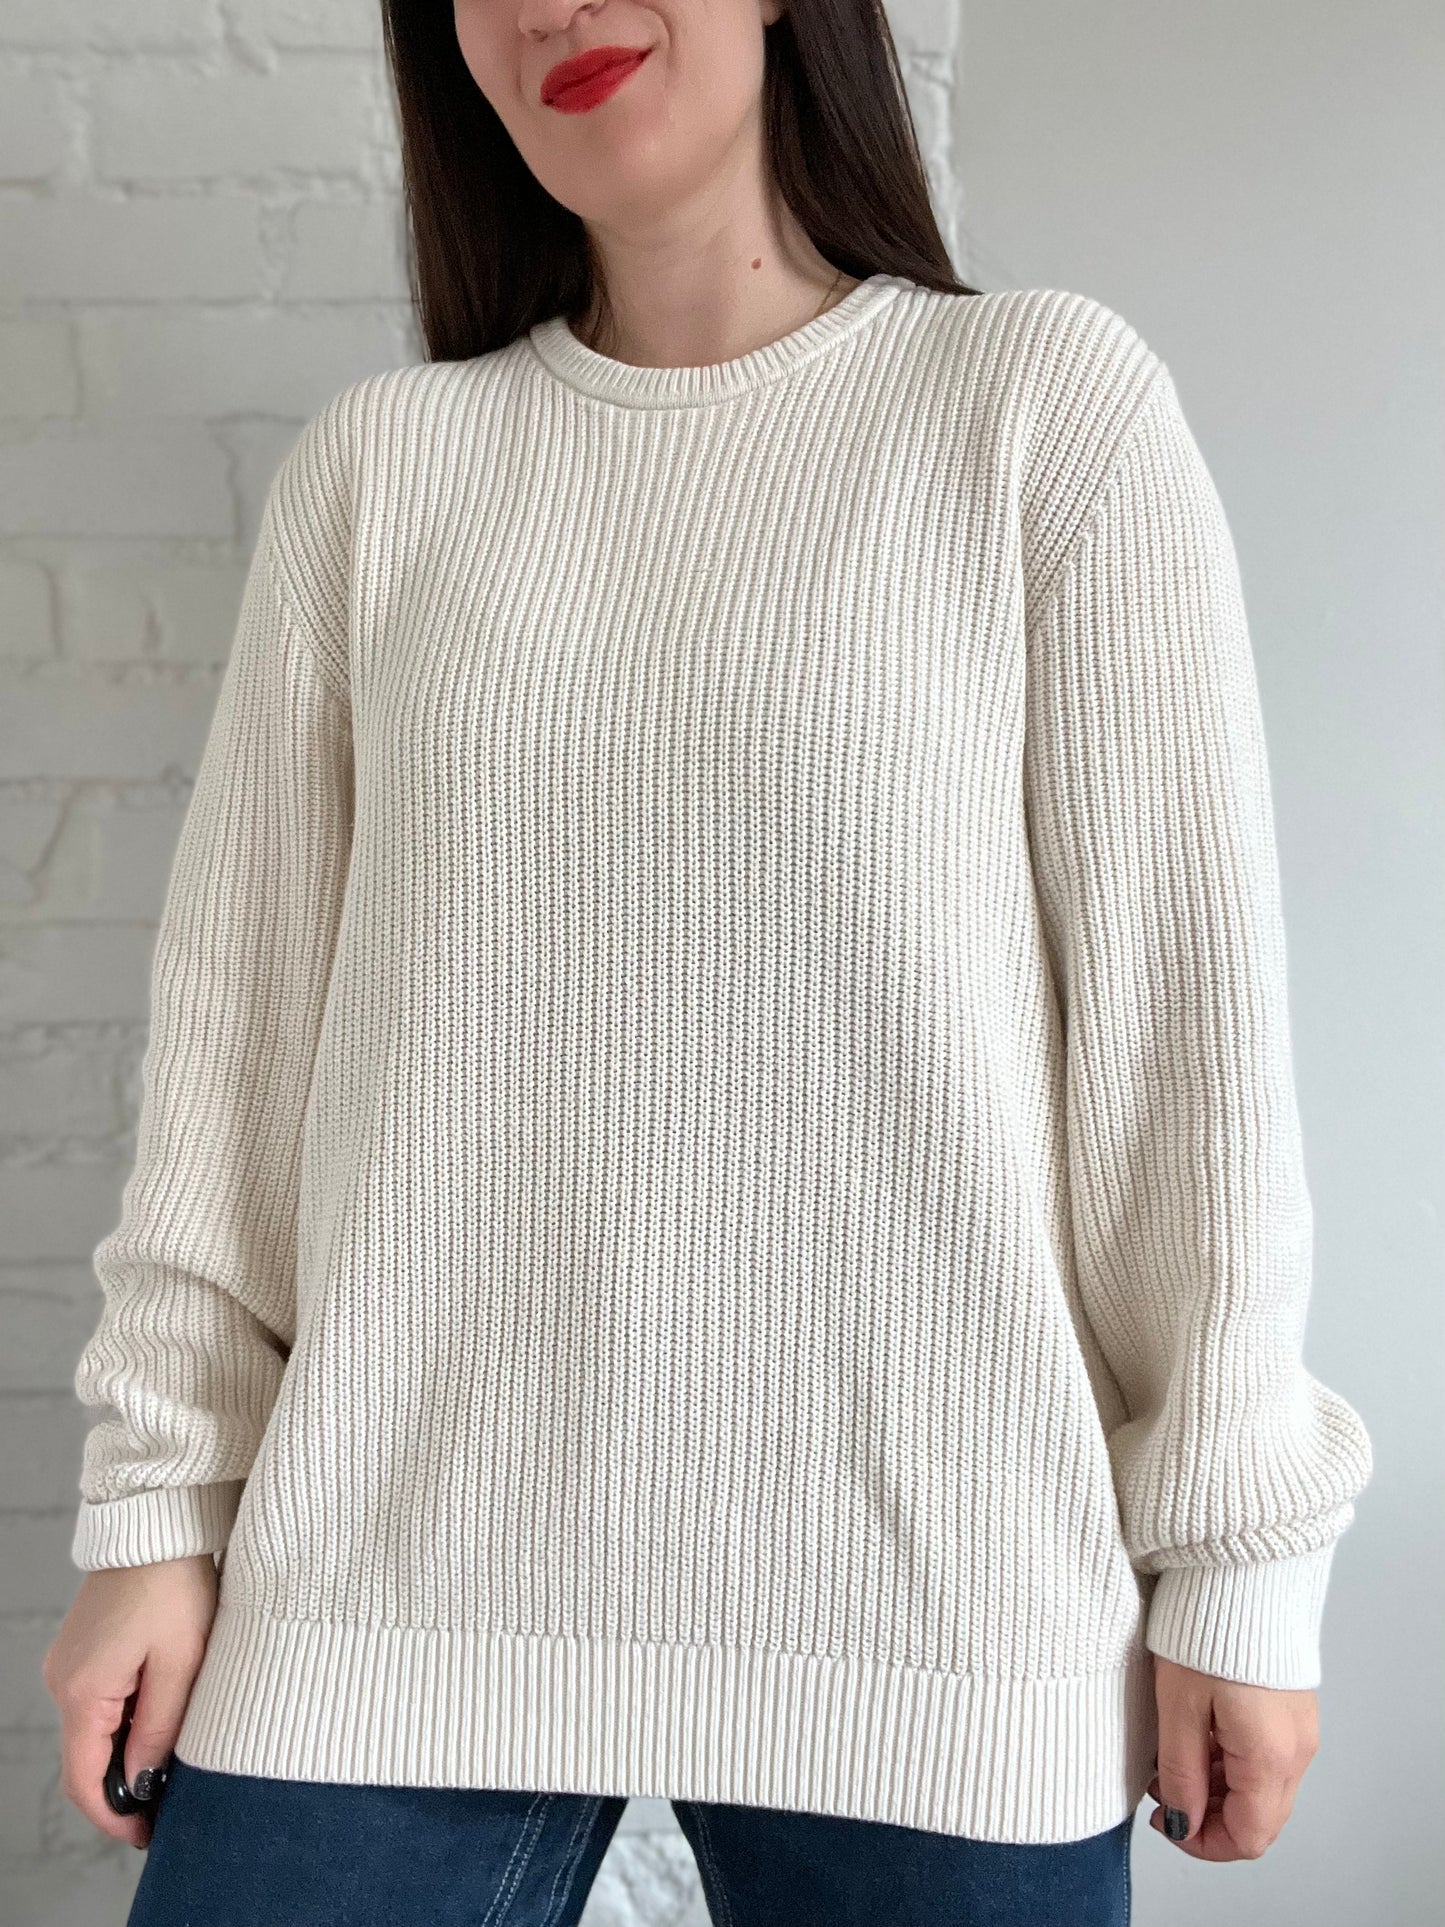 Chunky Oatmeal Knit Sweater - XL